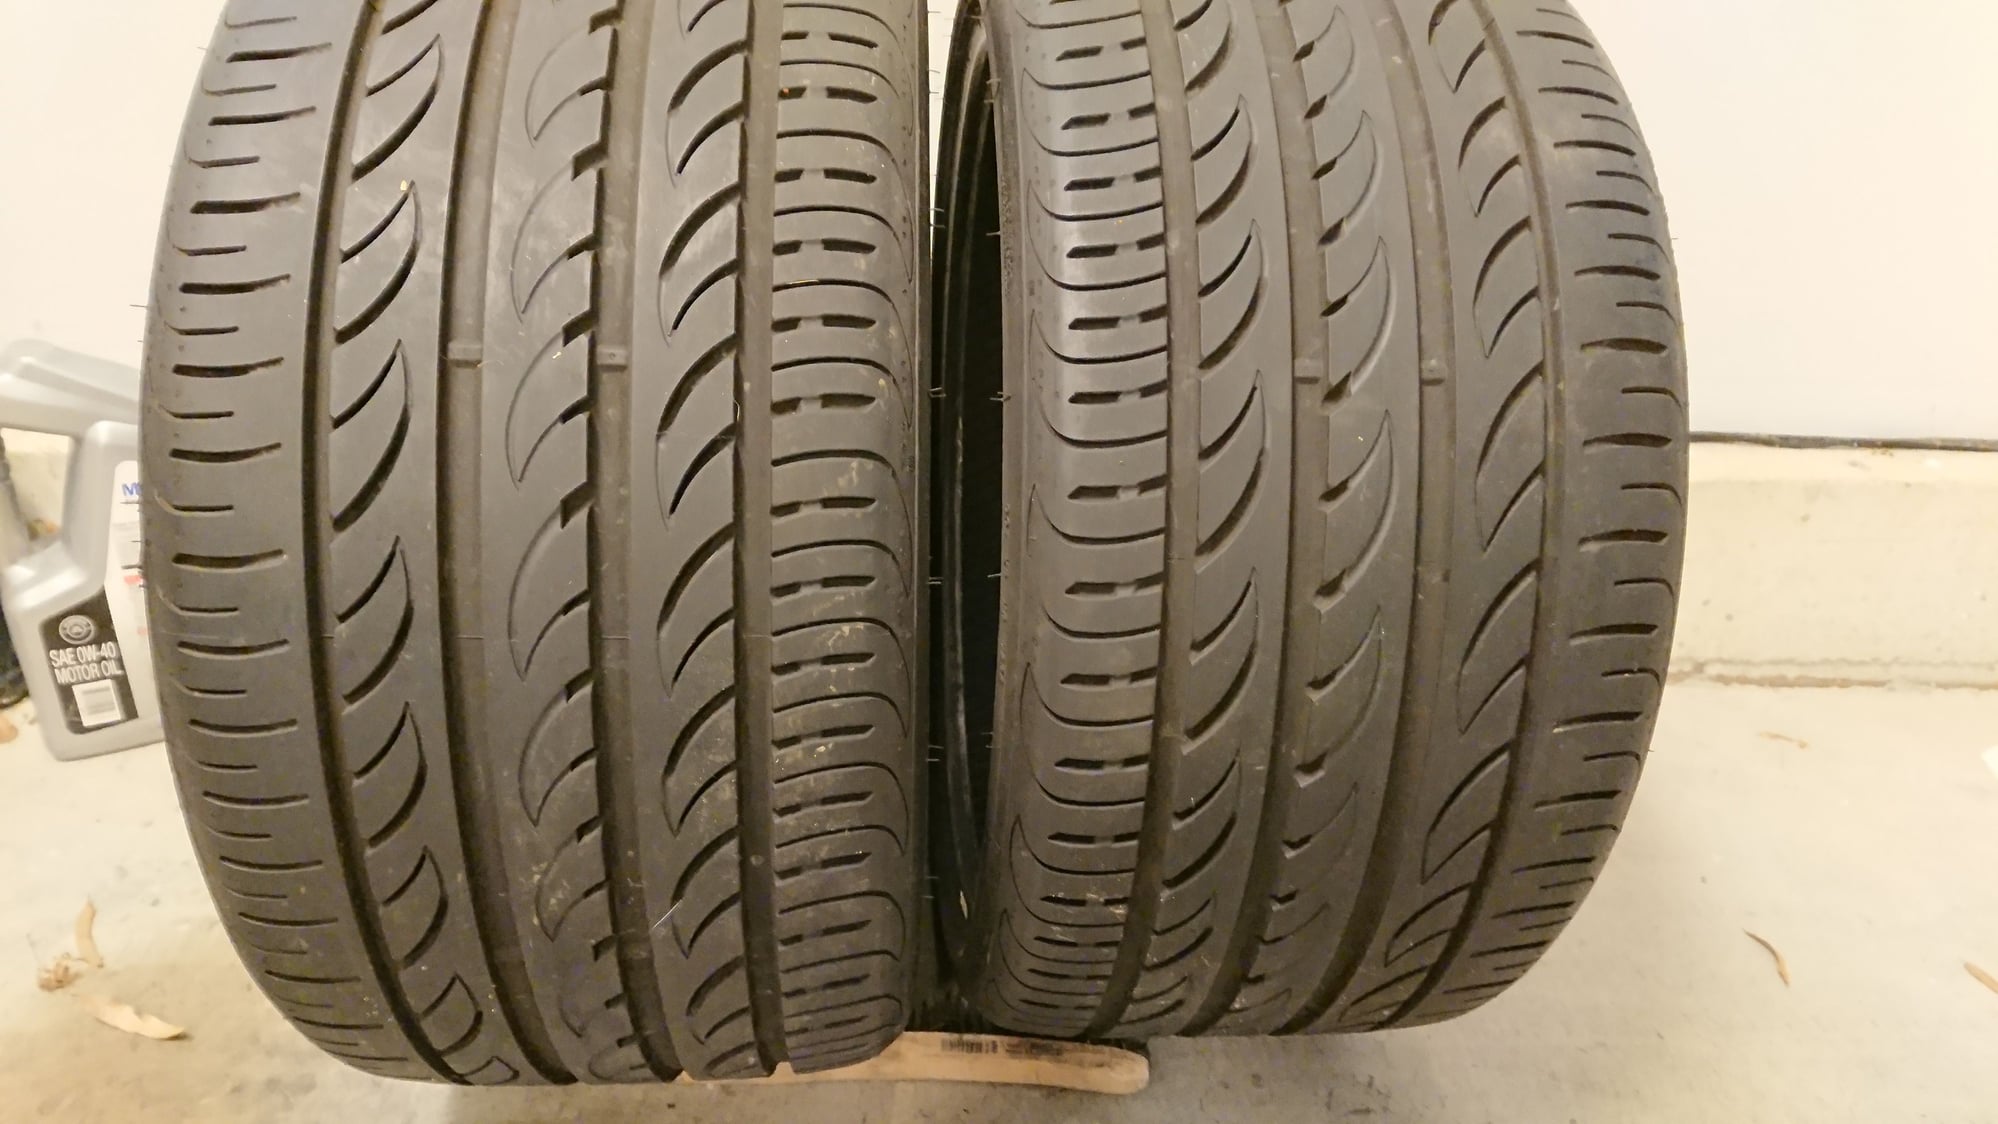 Wheels and Tires/Axles - Pirelli P Zero Nero GT Tires - Excellent Condition - Used - Lumberton, NJ 08048, United States